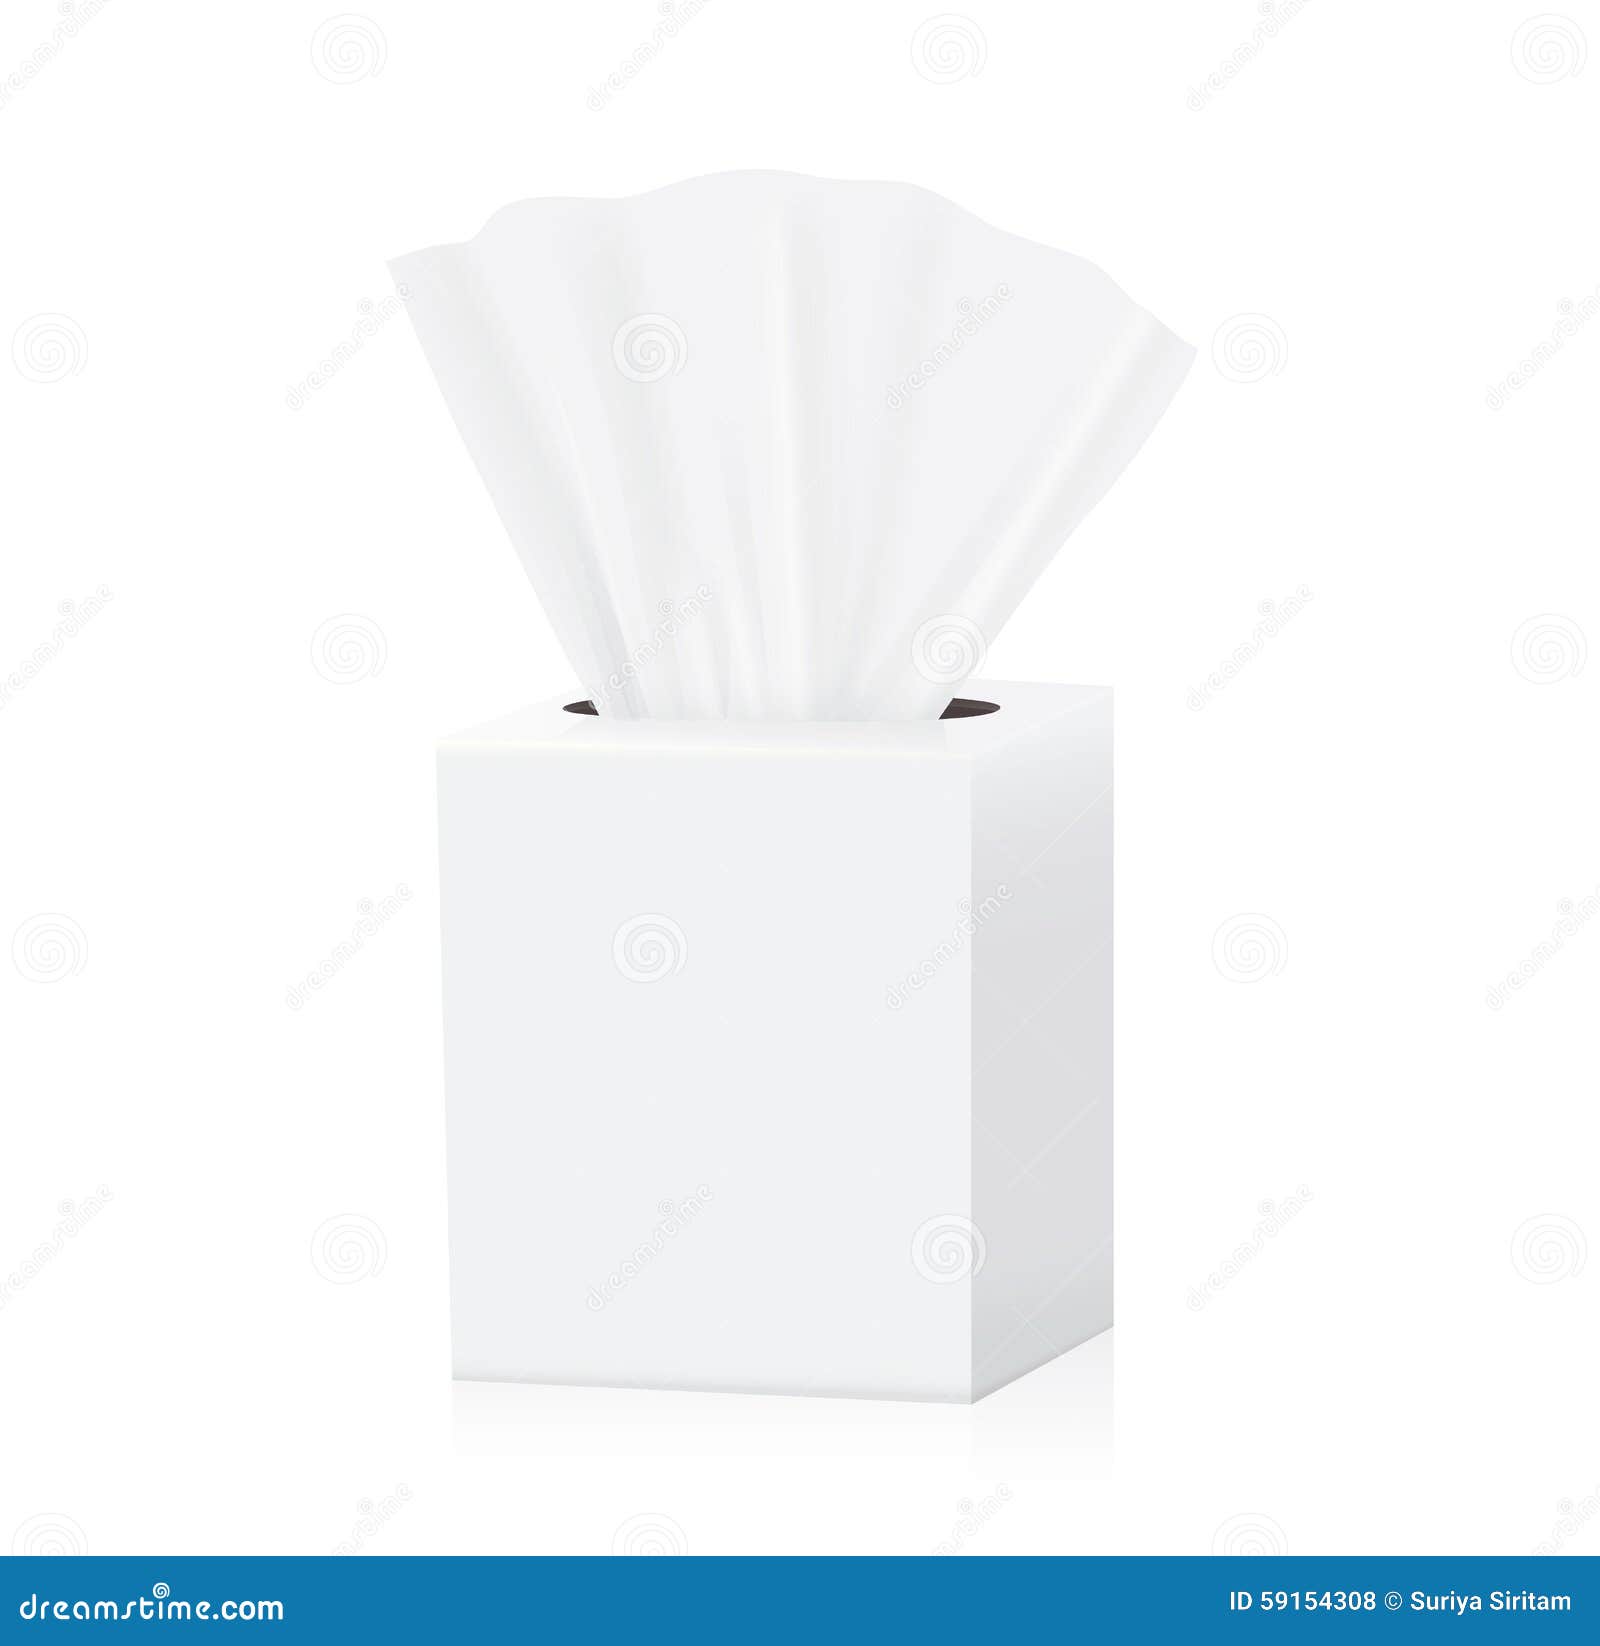 Download Free Mockup Tissue Paper / 26+ Tissue Paper Mockup Design PSD Free Download ... / Amazing set of ...